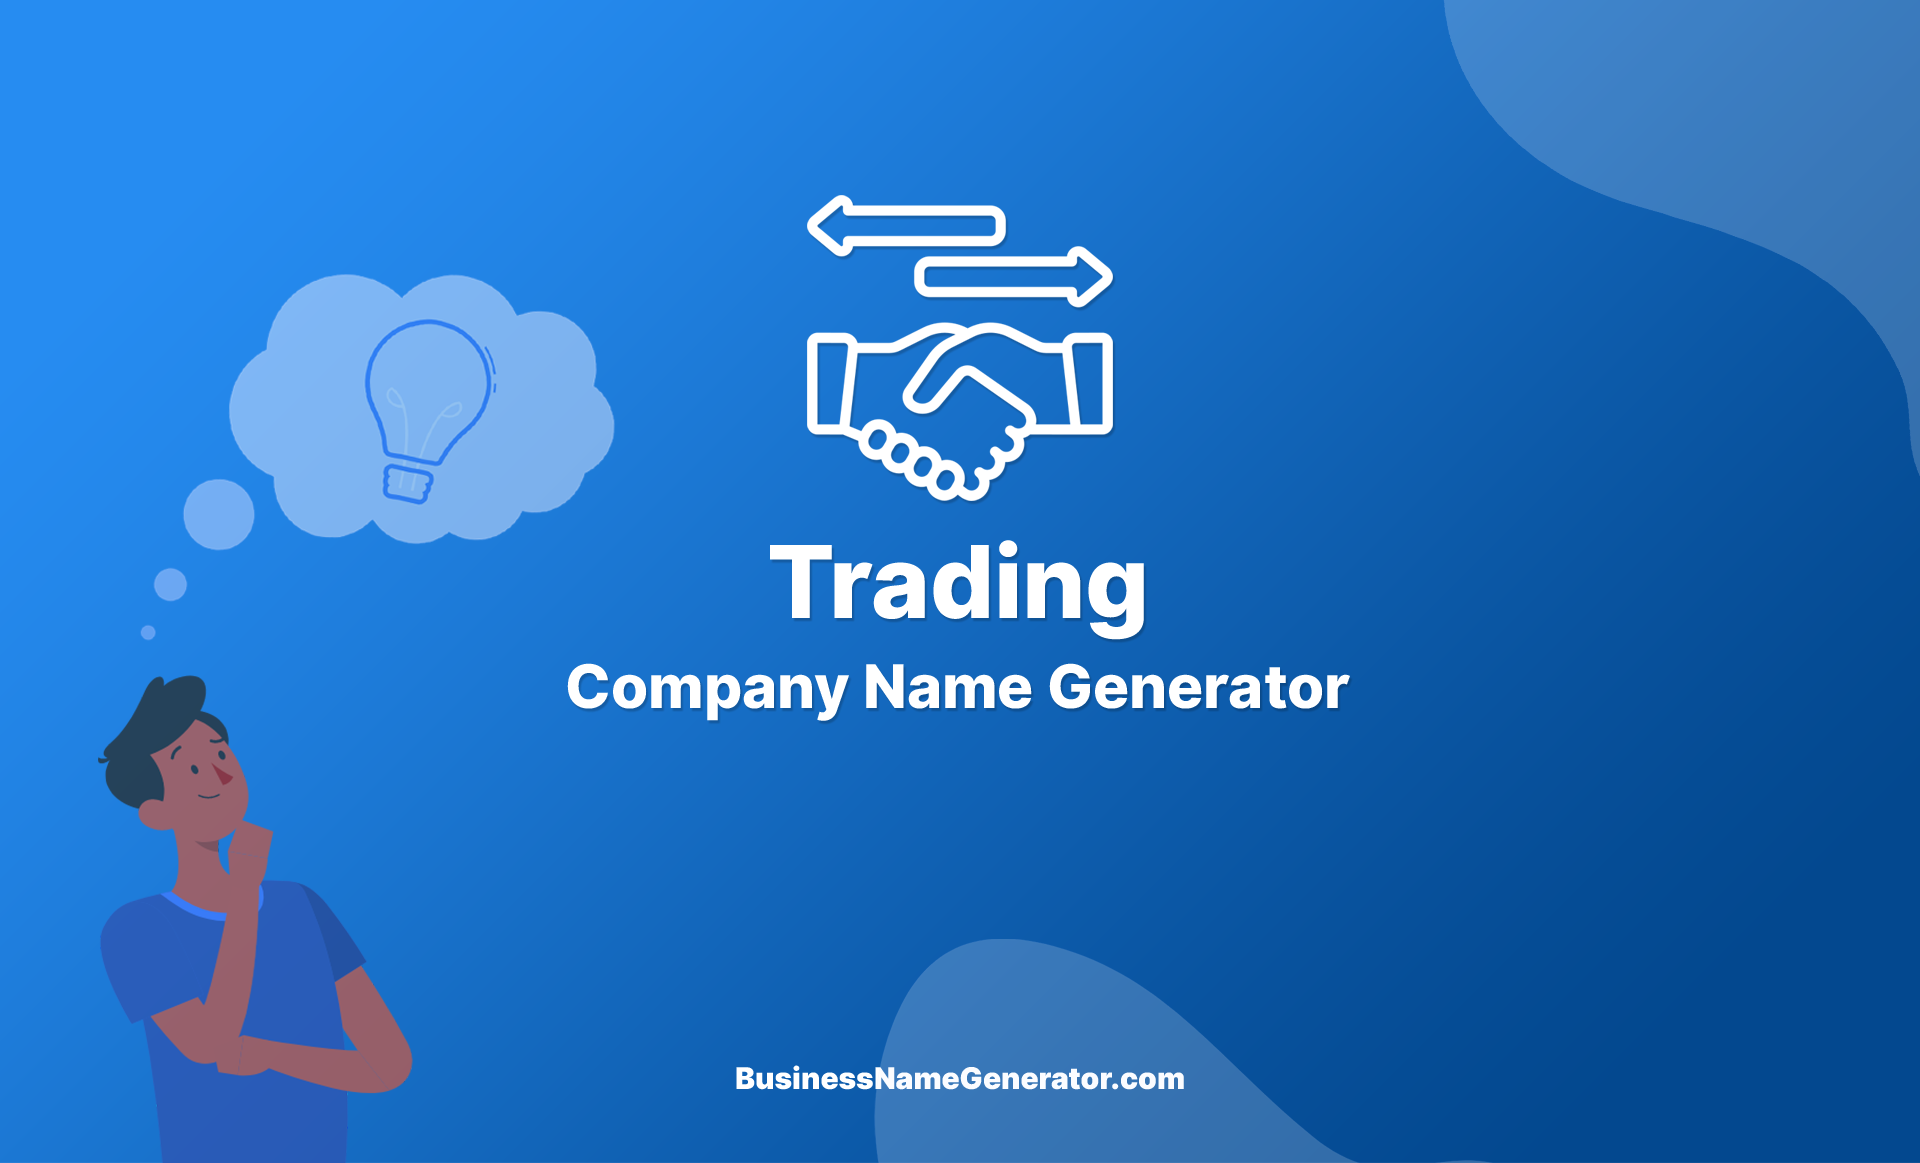 Trading Company Name Generator